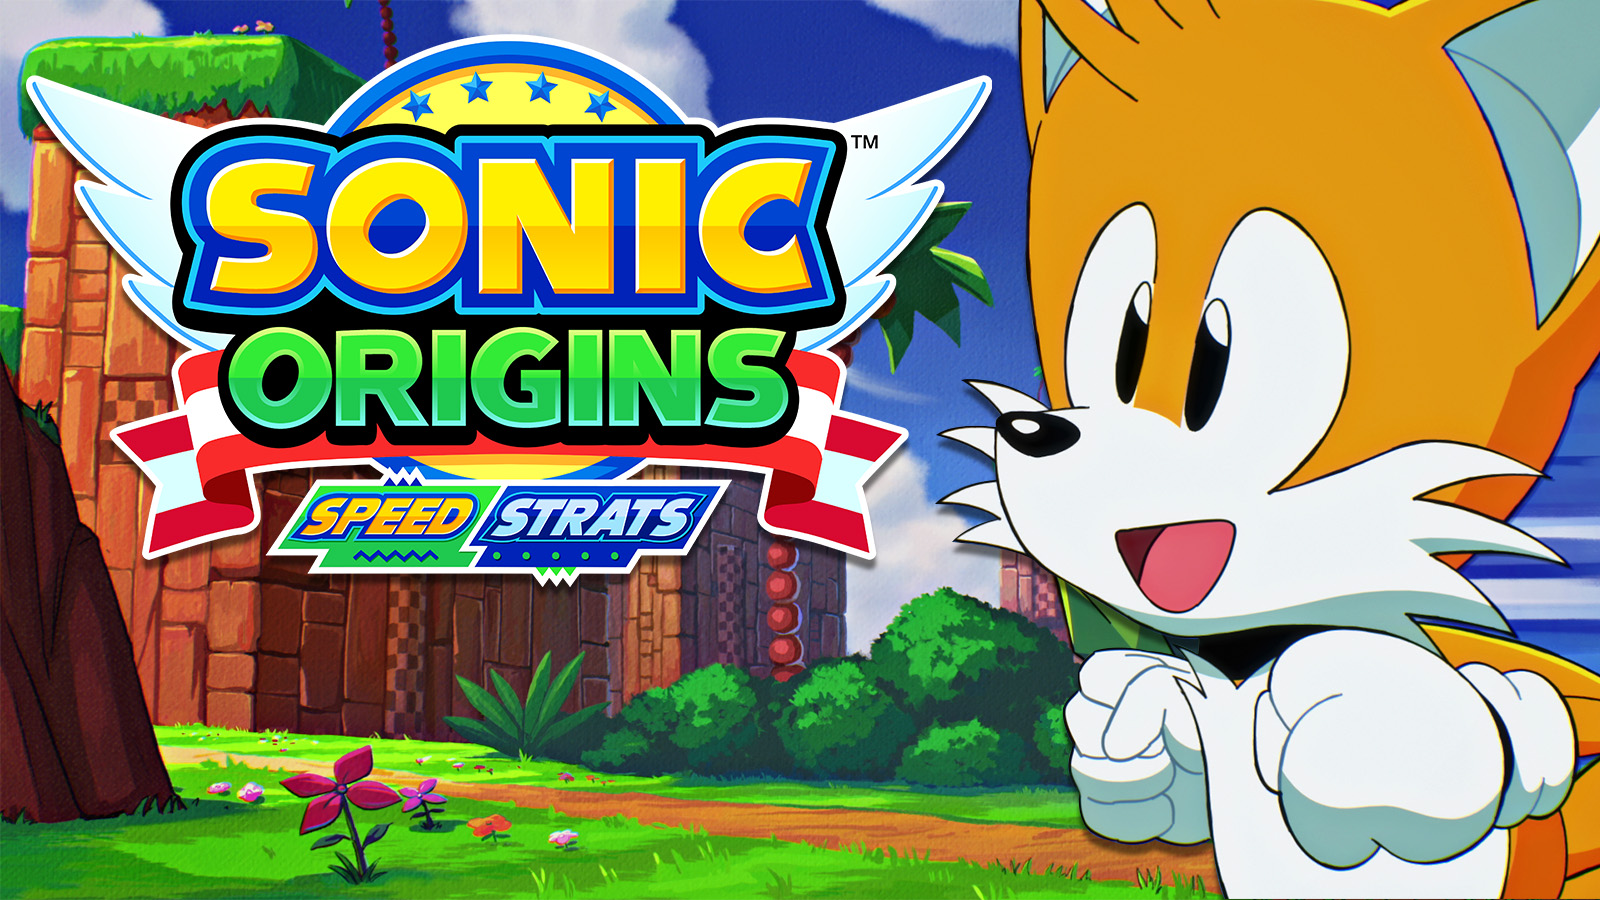 Sonic Origins: Speed Strats -Sonic the Hedgehog 2